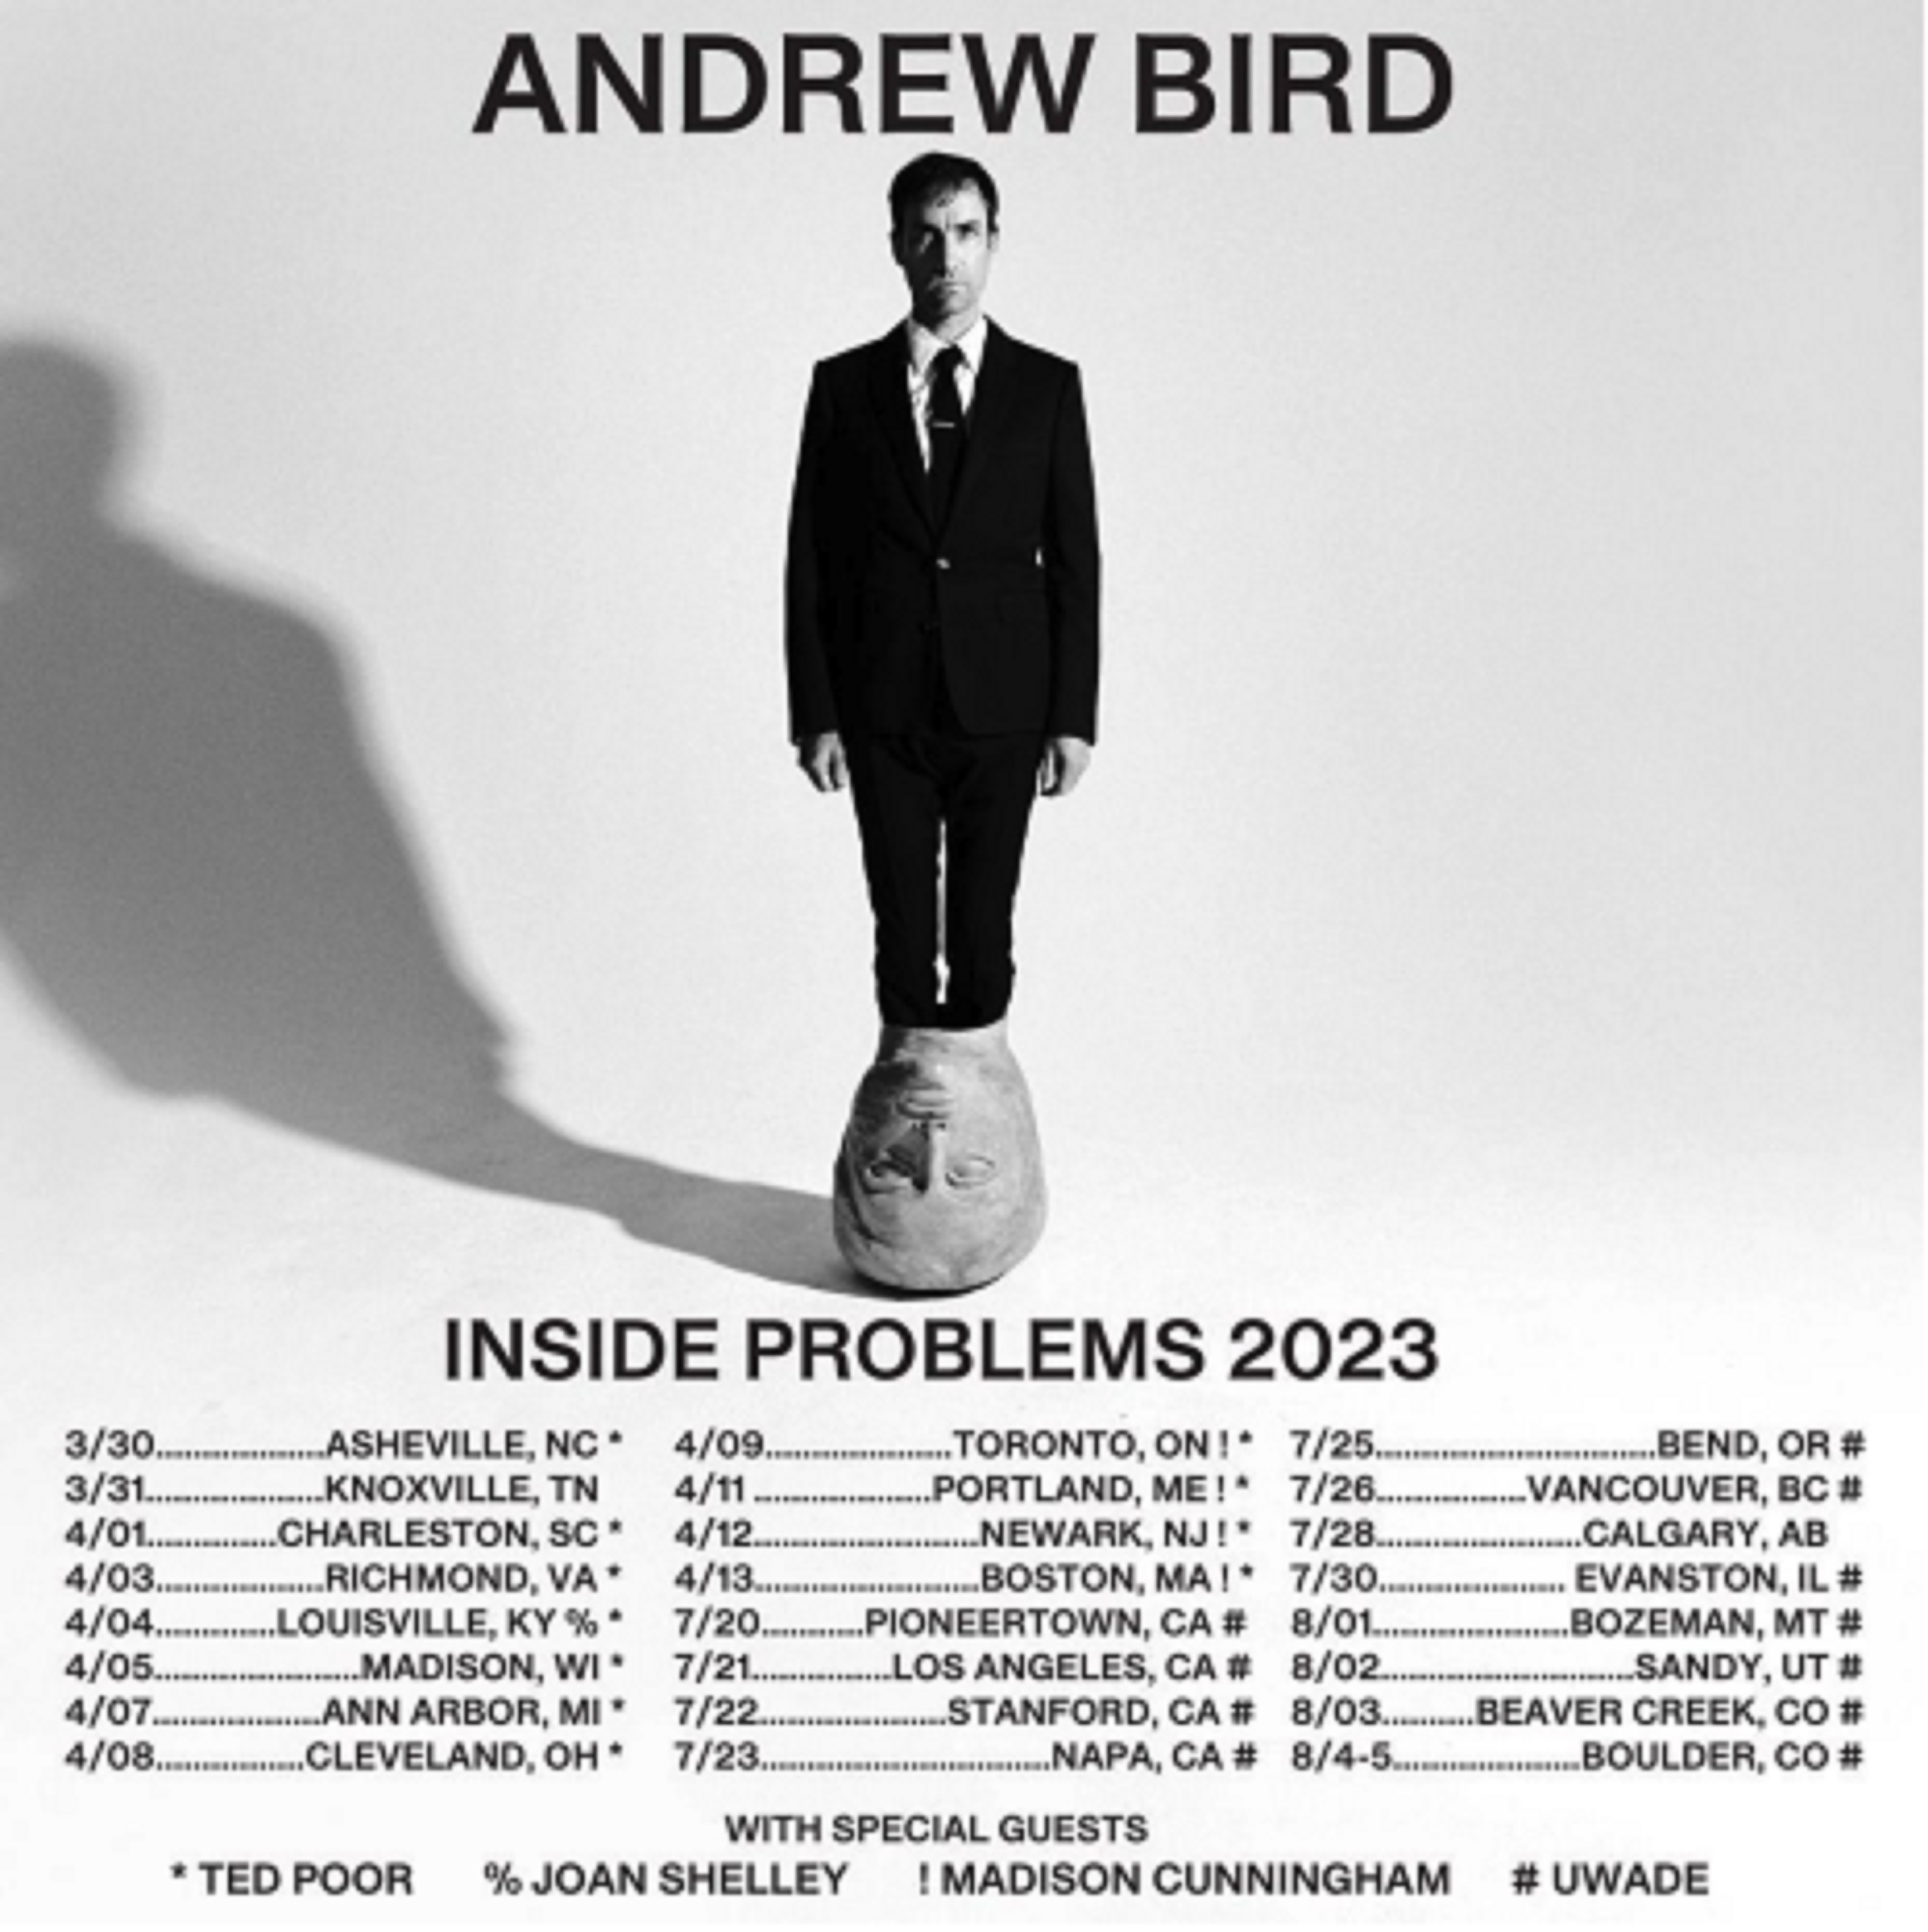 andrew bird tour schedule